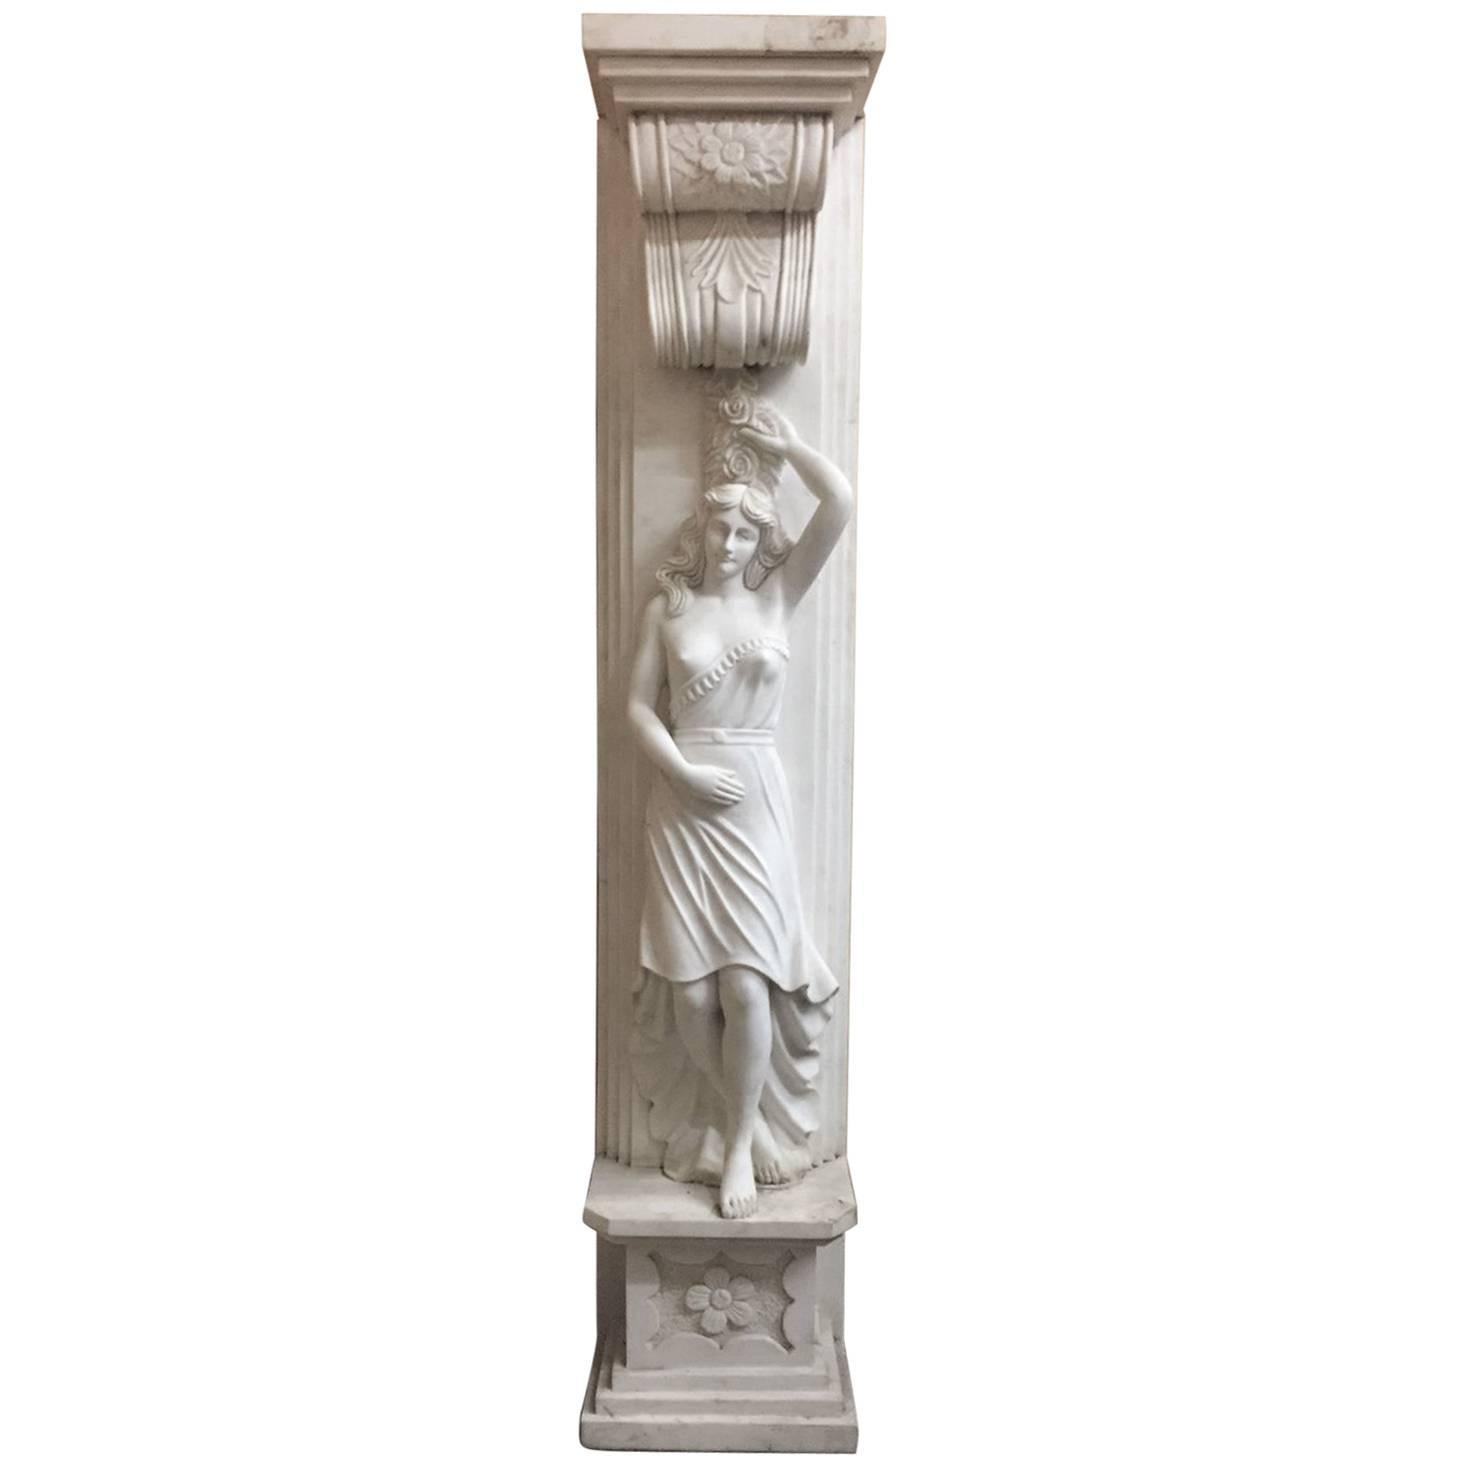 Panneau figuratif en marbre de style néoclassique italien